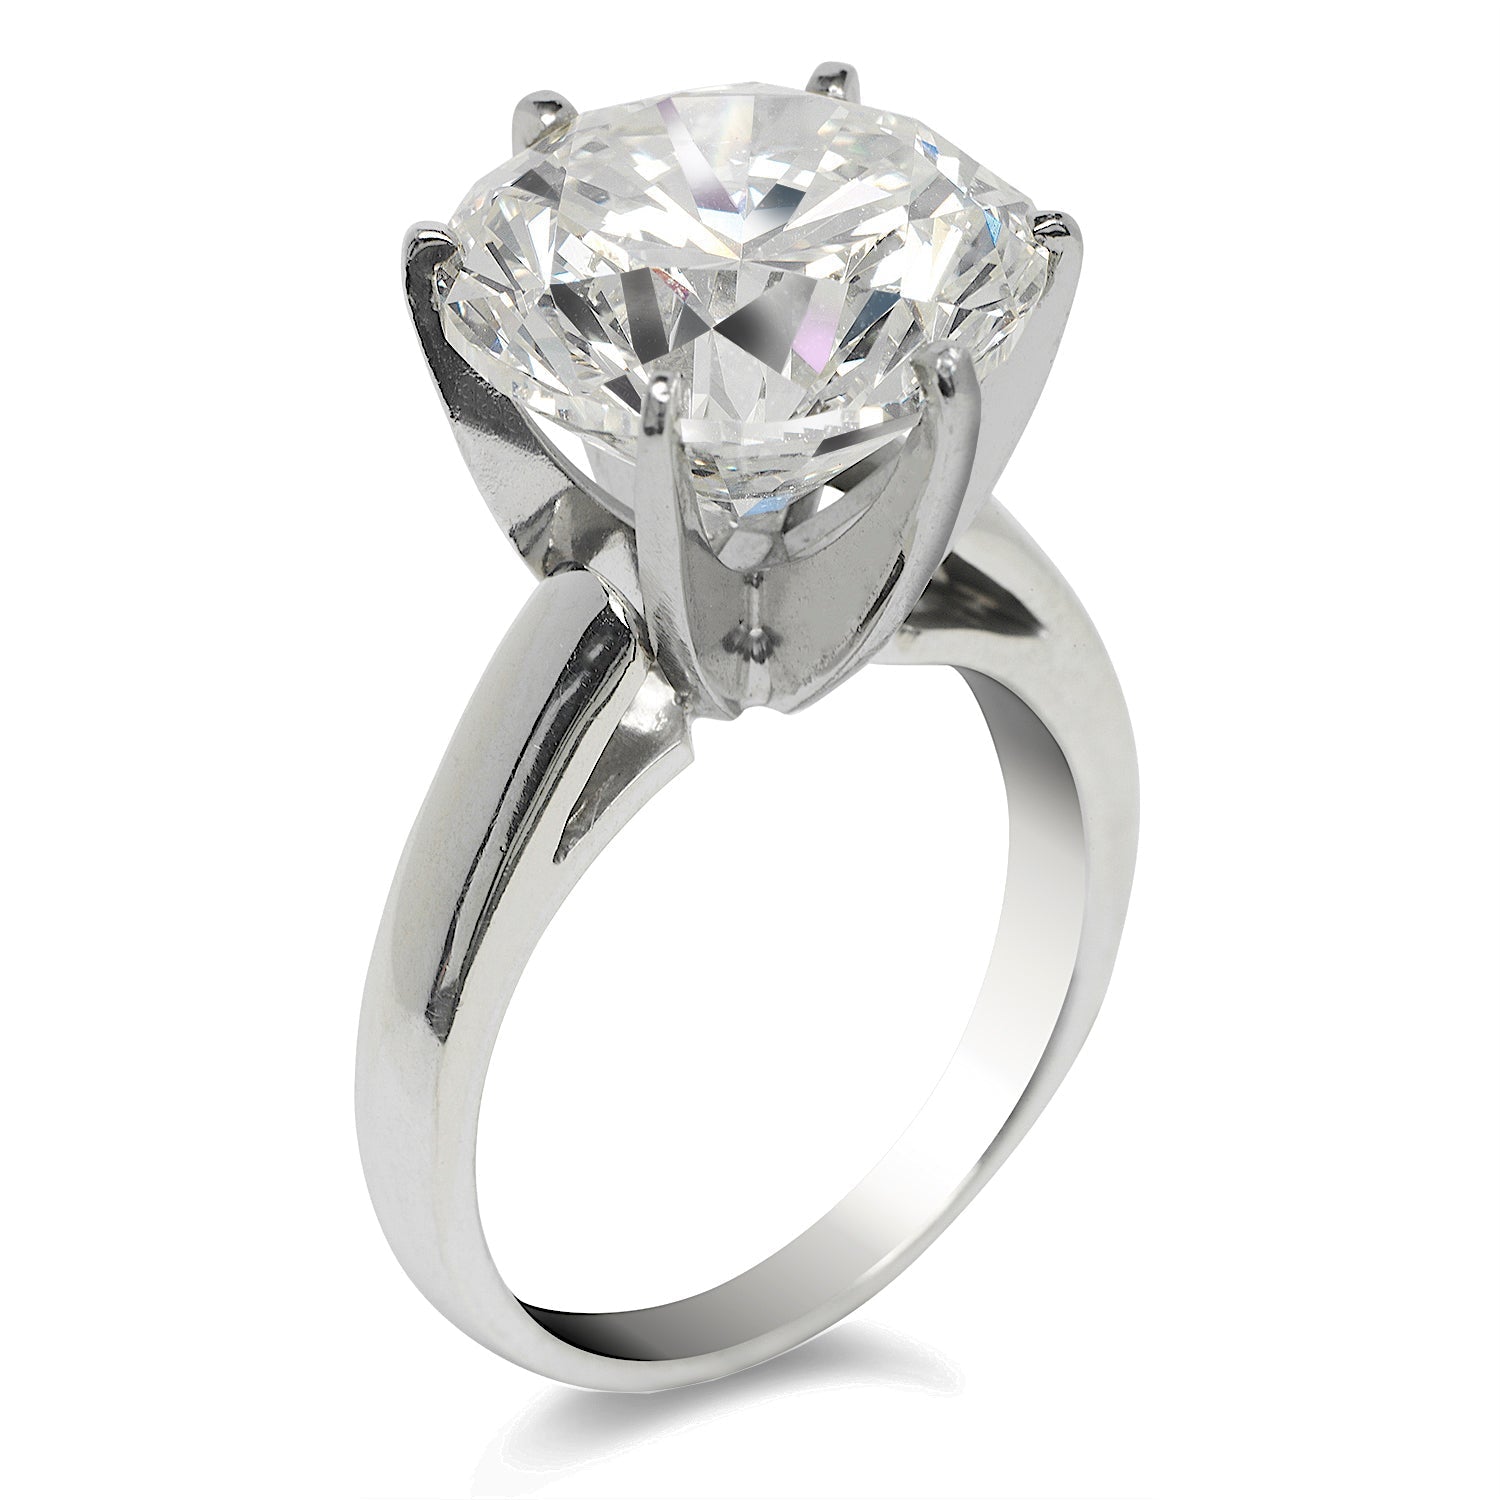 Men's Diamond Wedding Ring 3 Carat in 14K Gold Size 12 14K Yellow Gold - Men Diamond Wedding Bands - Mike Nekta NYC - Nekta New York